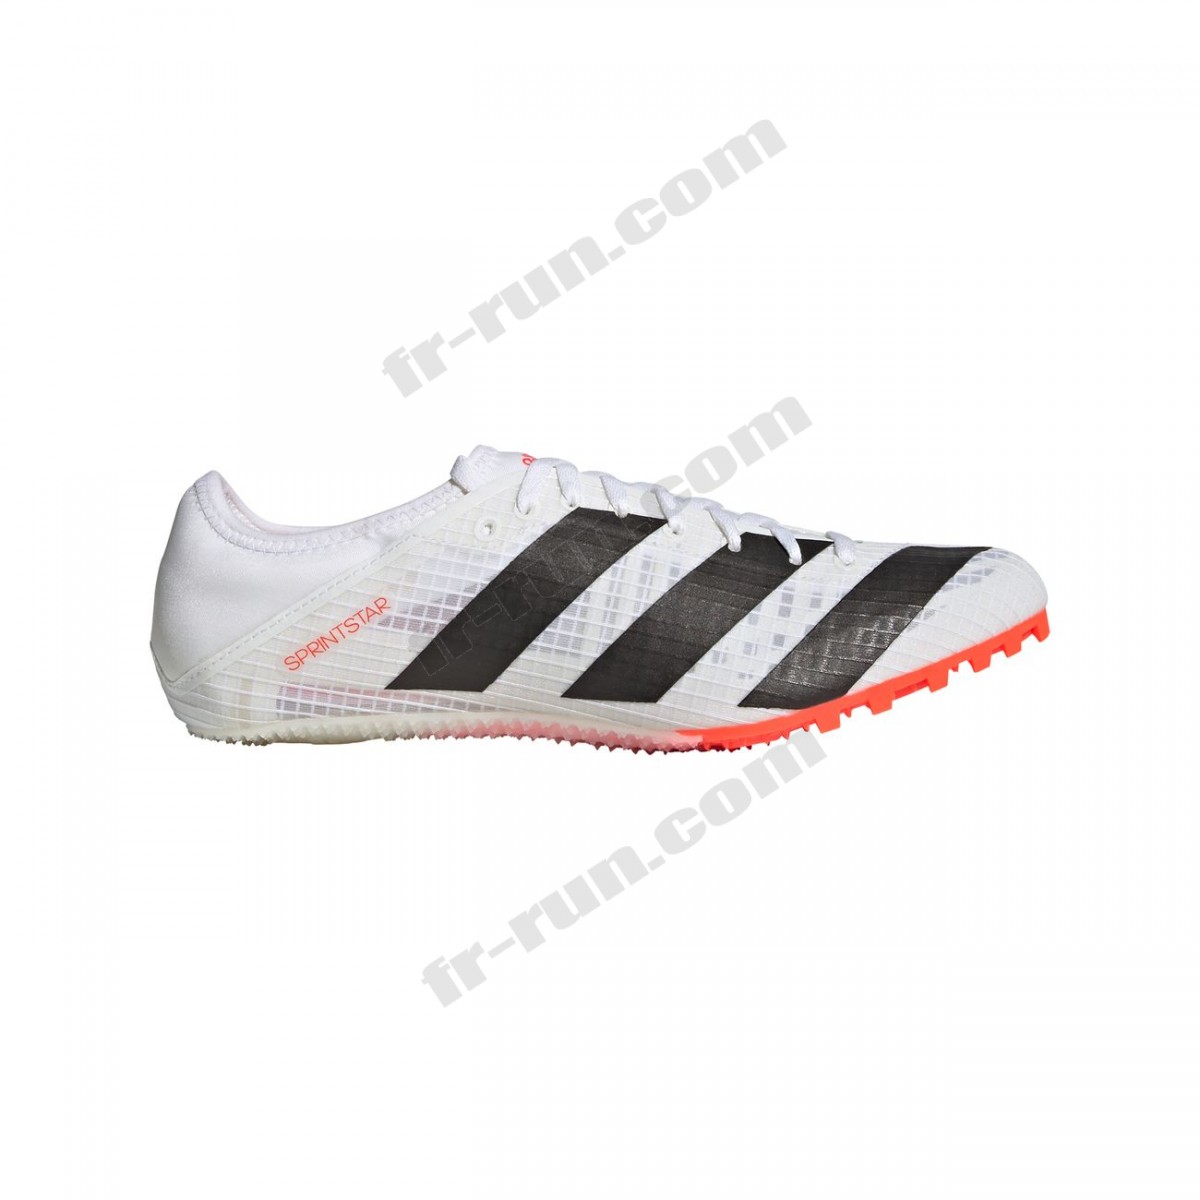 Adidas/Athlétisme homme ADIDAS Chaussures adidas Sprintstar Tokyo √ Nouveau style √ Soldes - -0